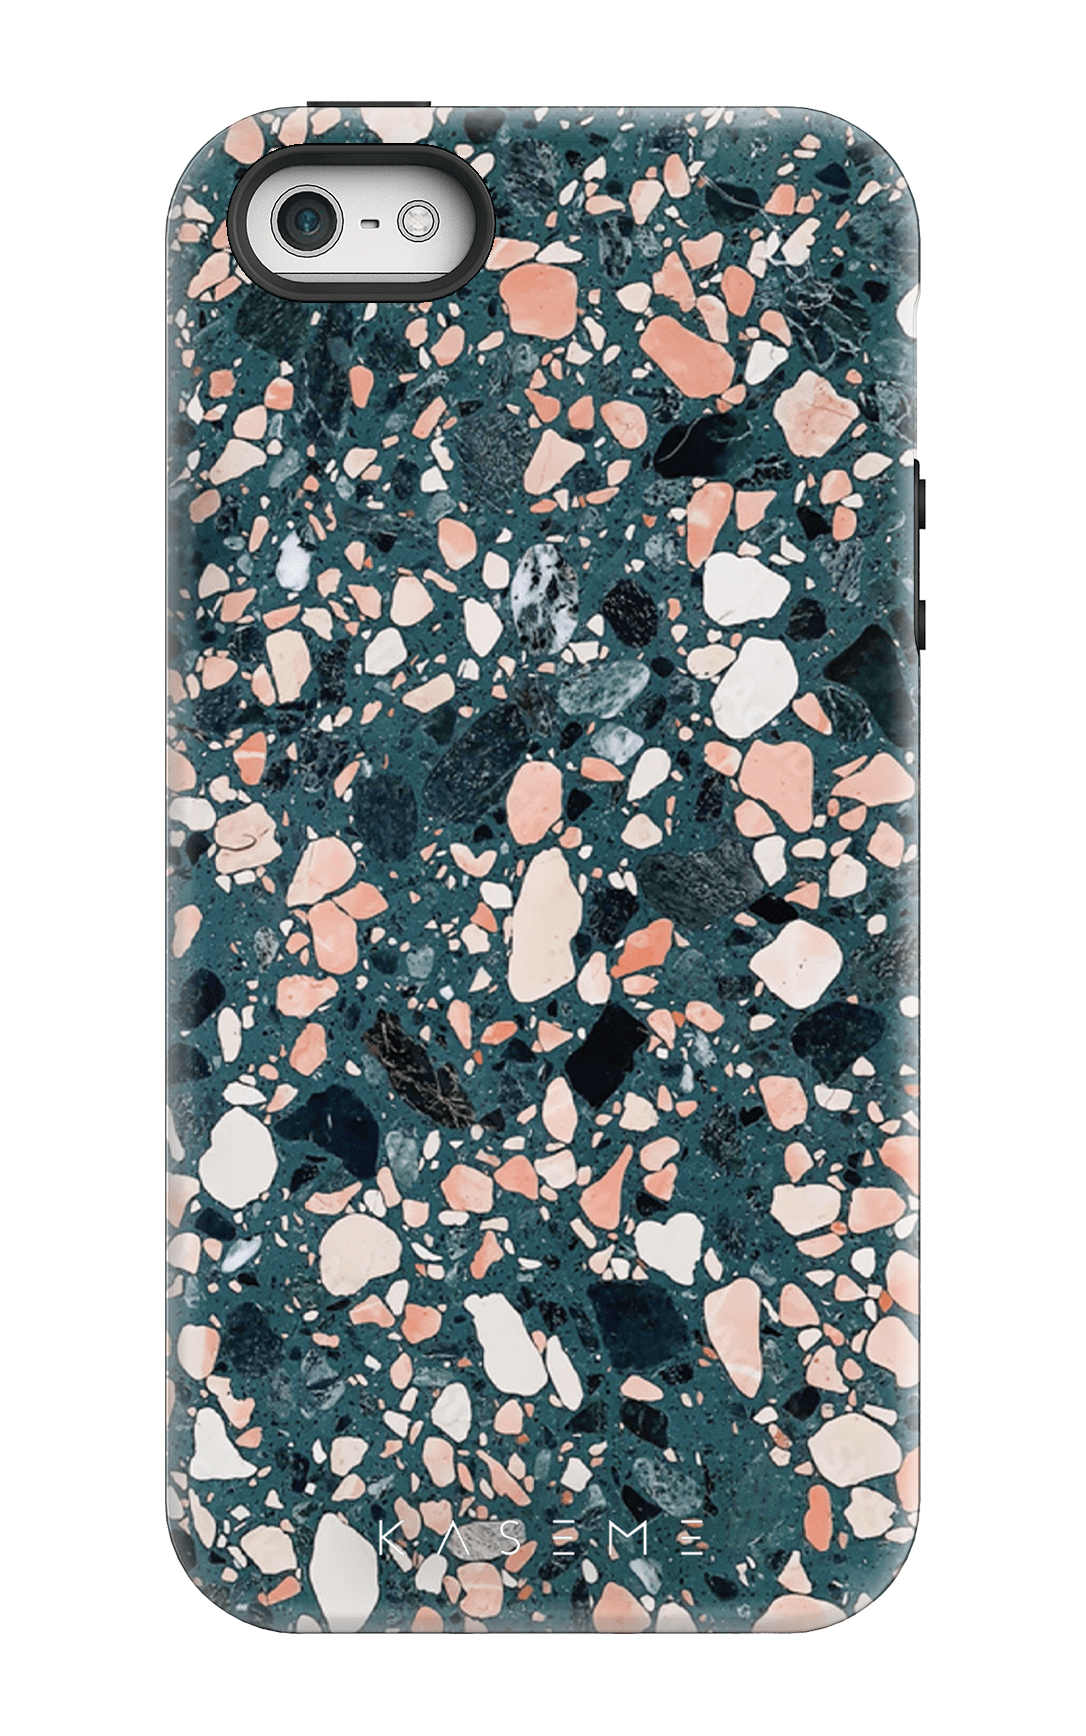 Frozen stone gray - iPhone 5/5S/SE